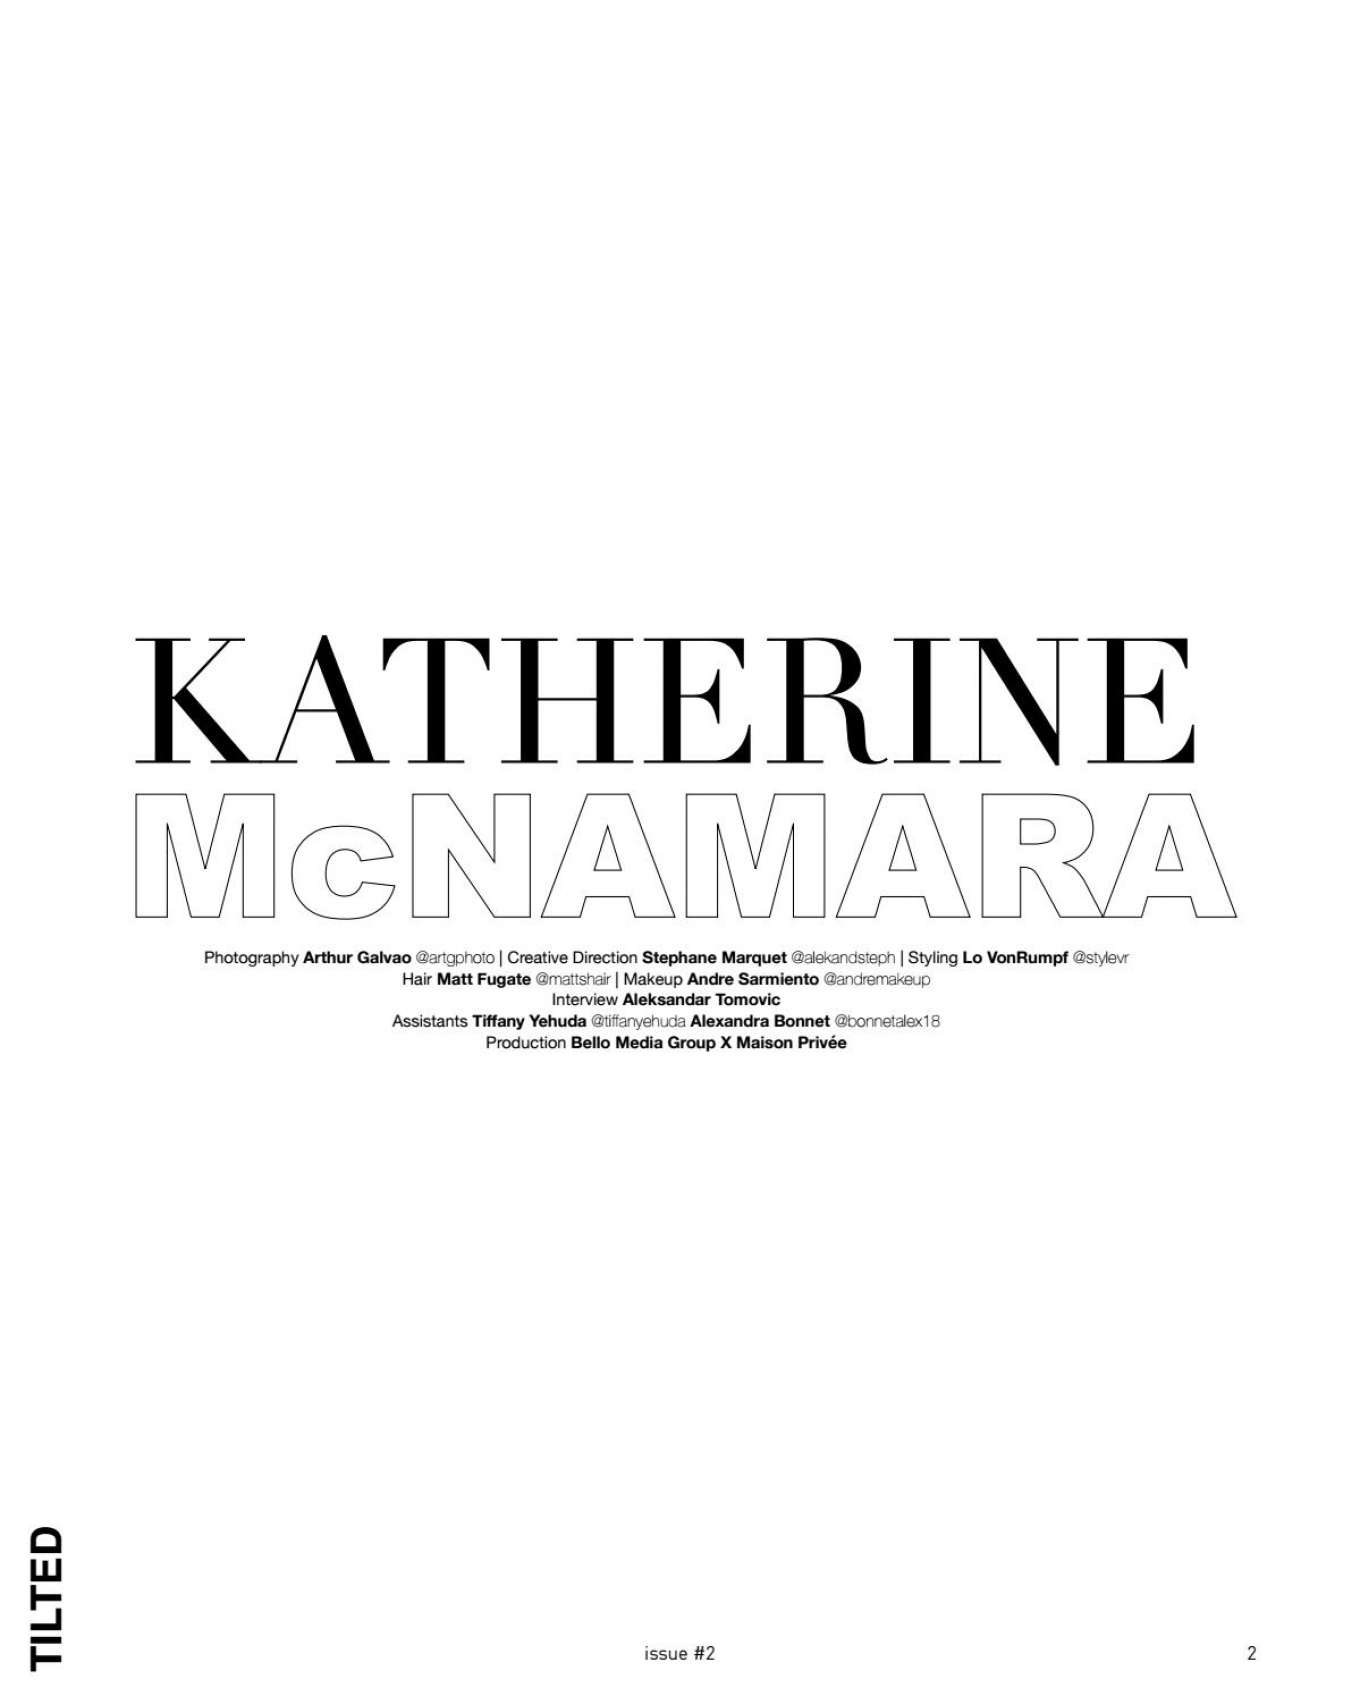 Katherine McNamara by Arthur Galvao for Tilted Style 2018